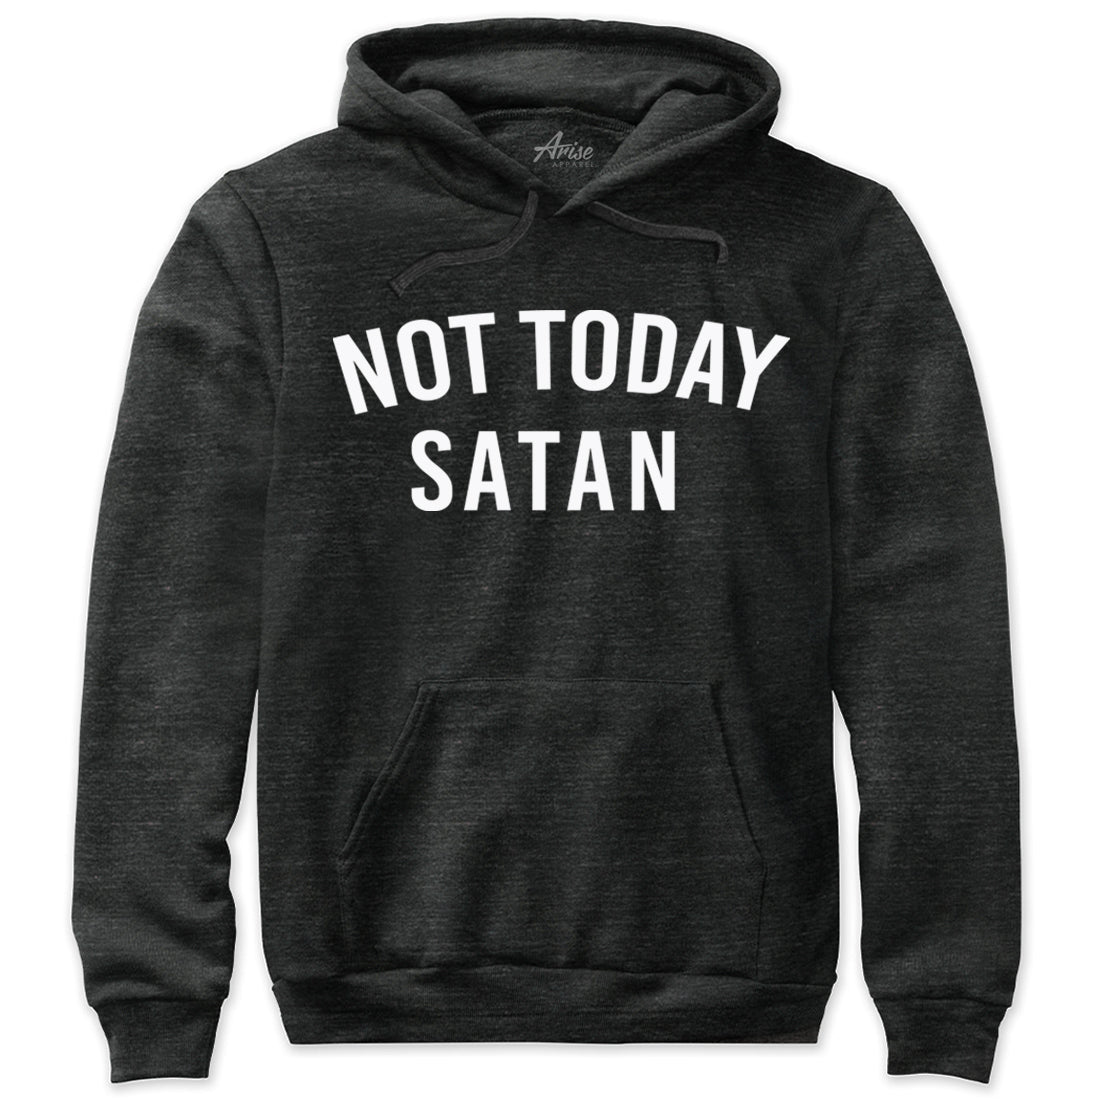 Not Today Satan Christian Hoodie Sweatshirt